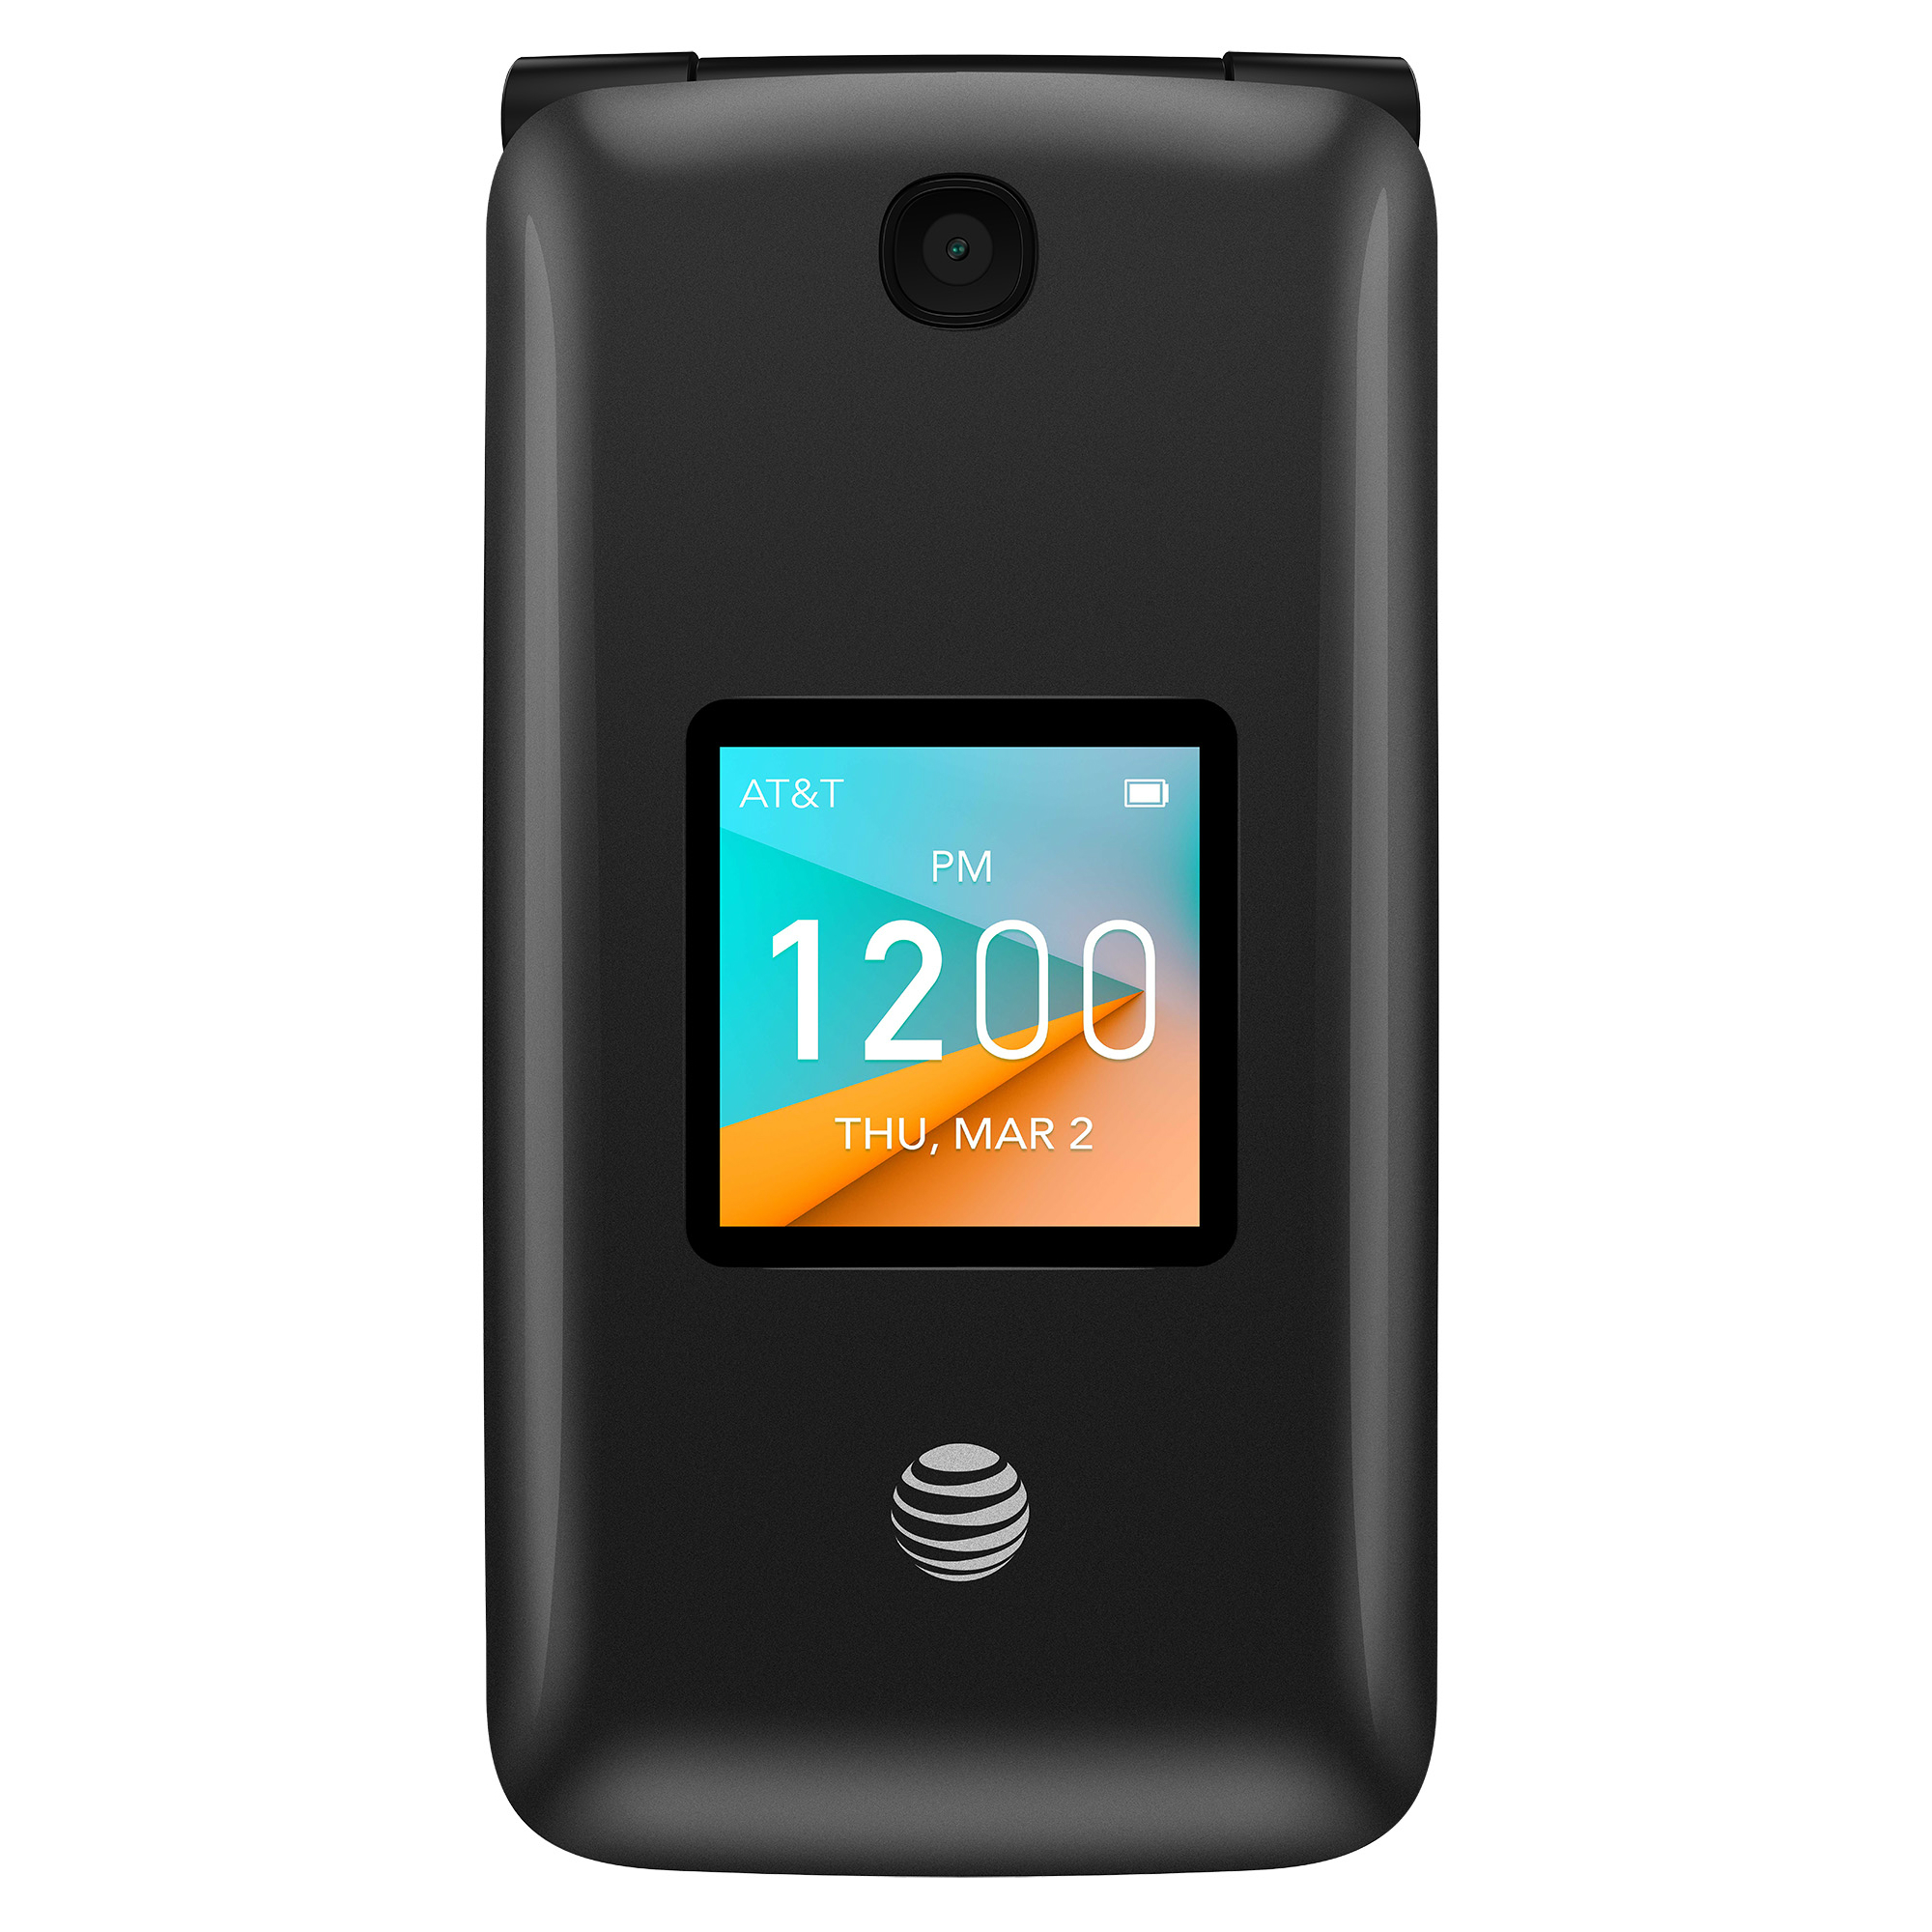 AT&T Cingular Flip 2, 25GB, Black - Prepaid Phone - image 2 of 3